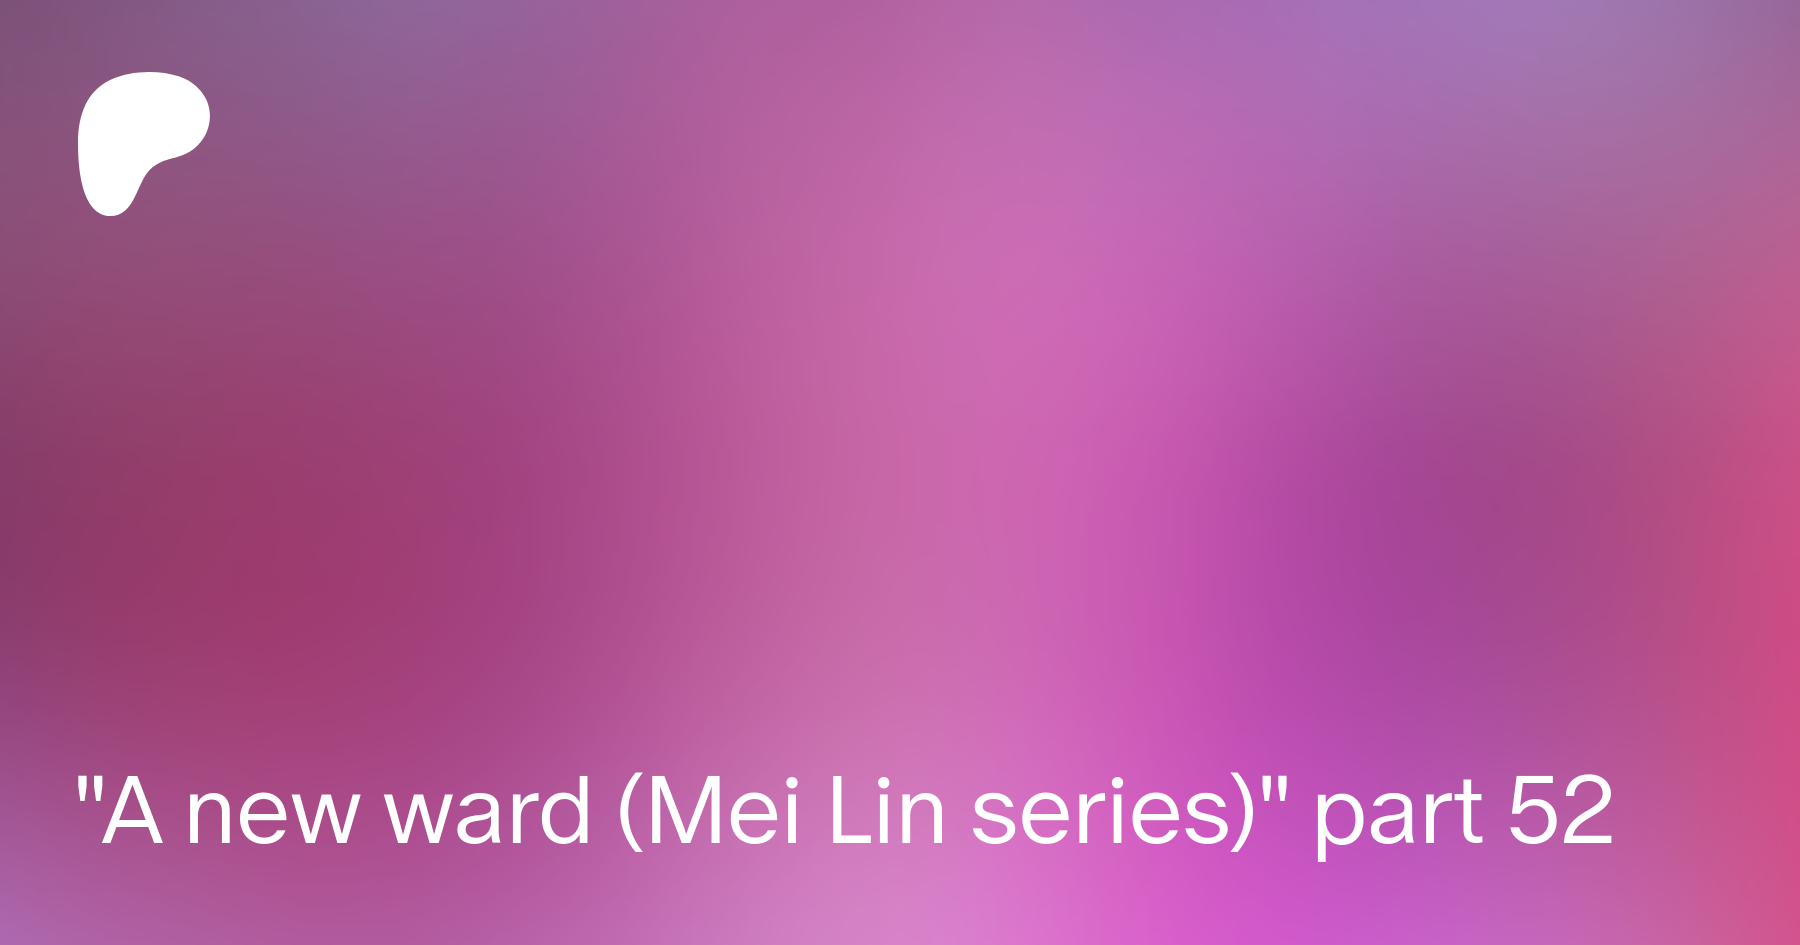 A new ward (Mei Lin series) part 52 | Patreon